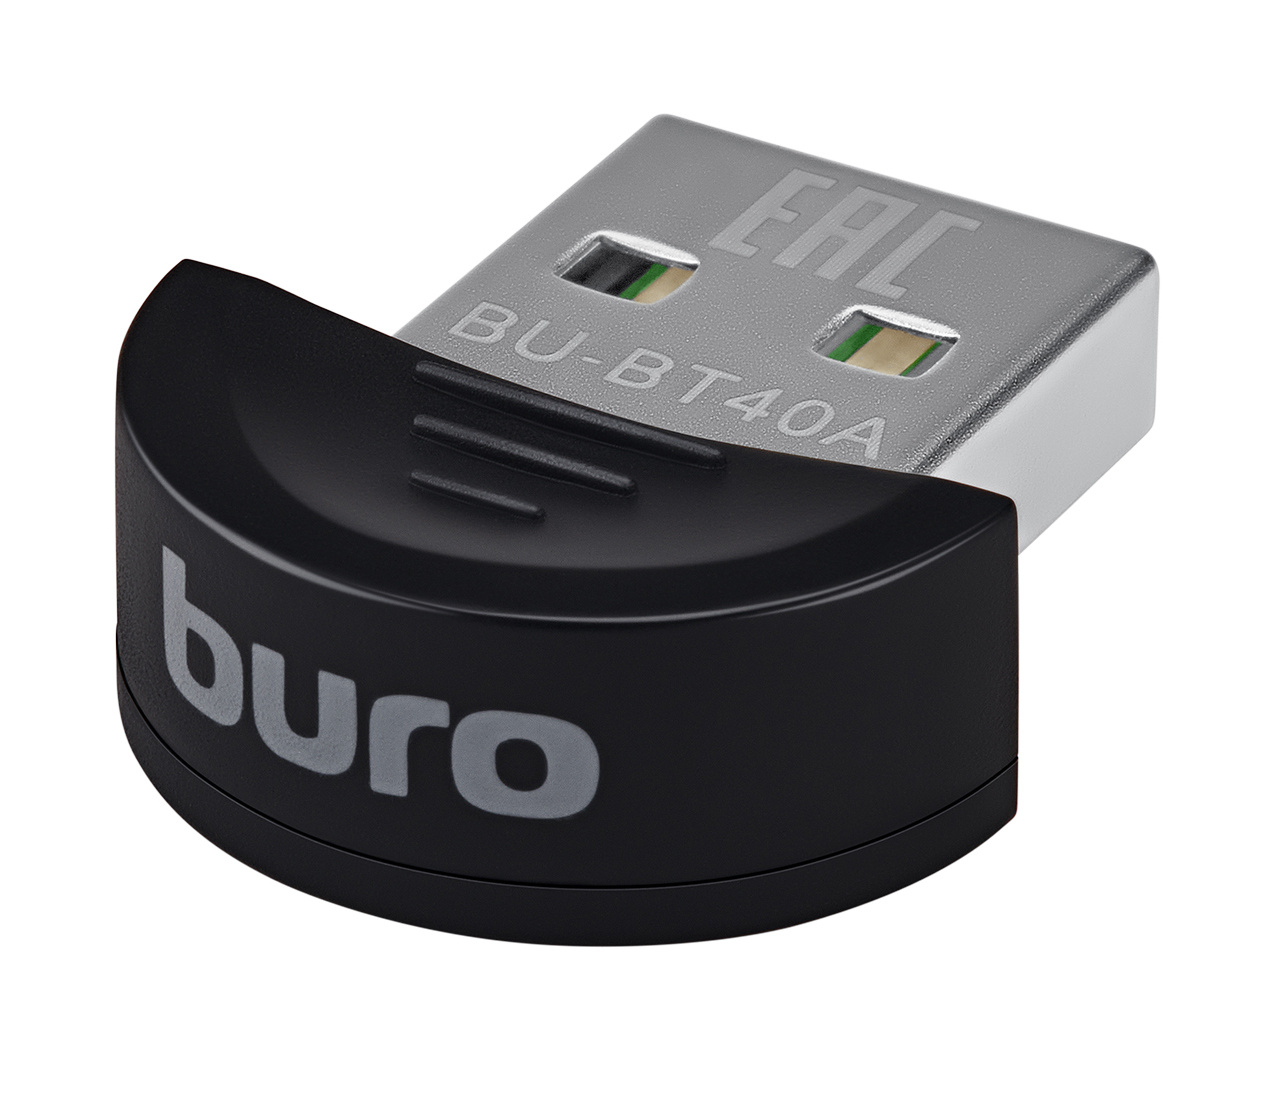 Адаптер USB Buro BU-BT40A